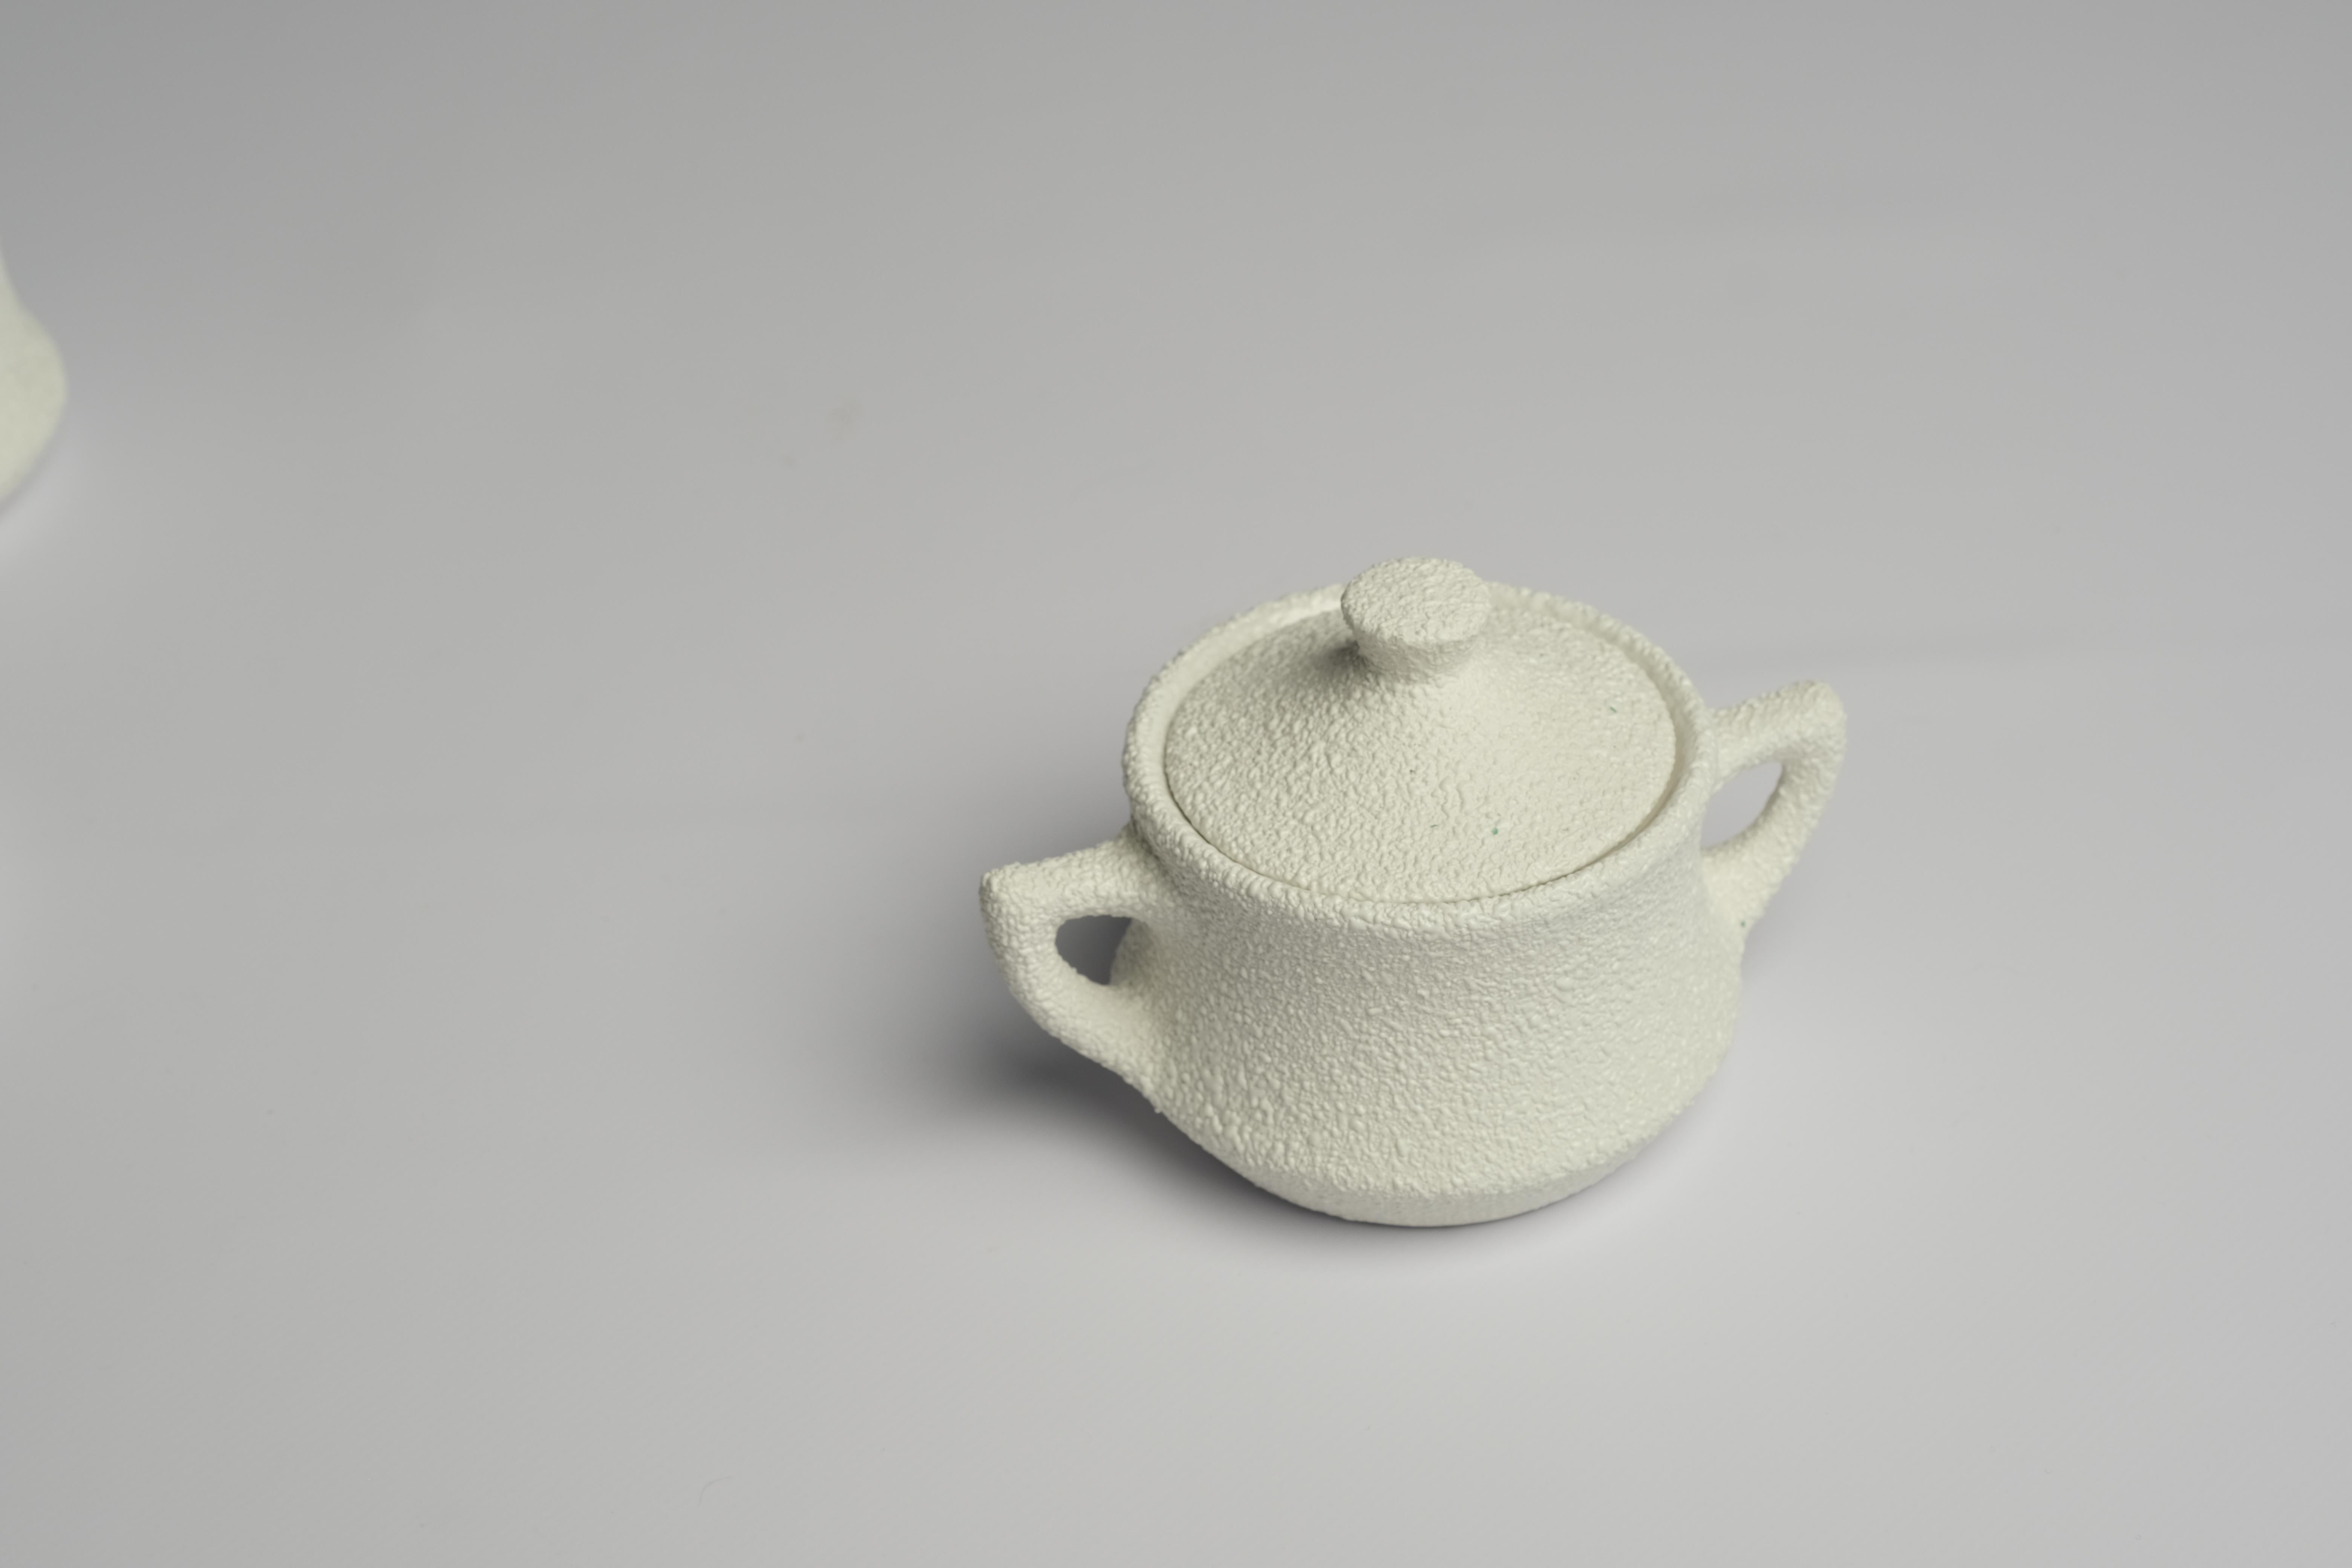 European Modern Ceramic Coffee/Tea Set in Sand Textured Stucco Finish For Sale